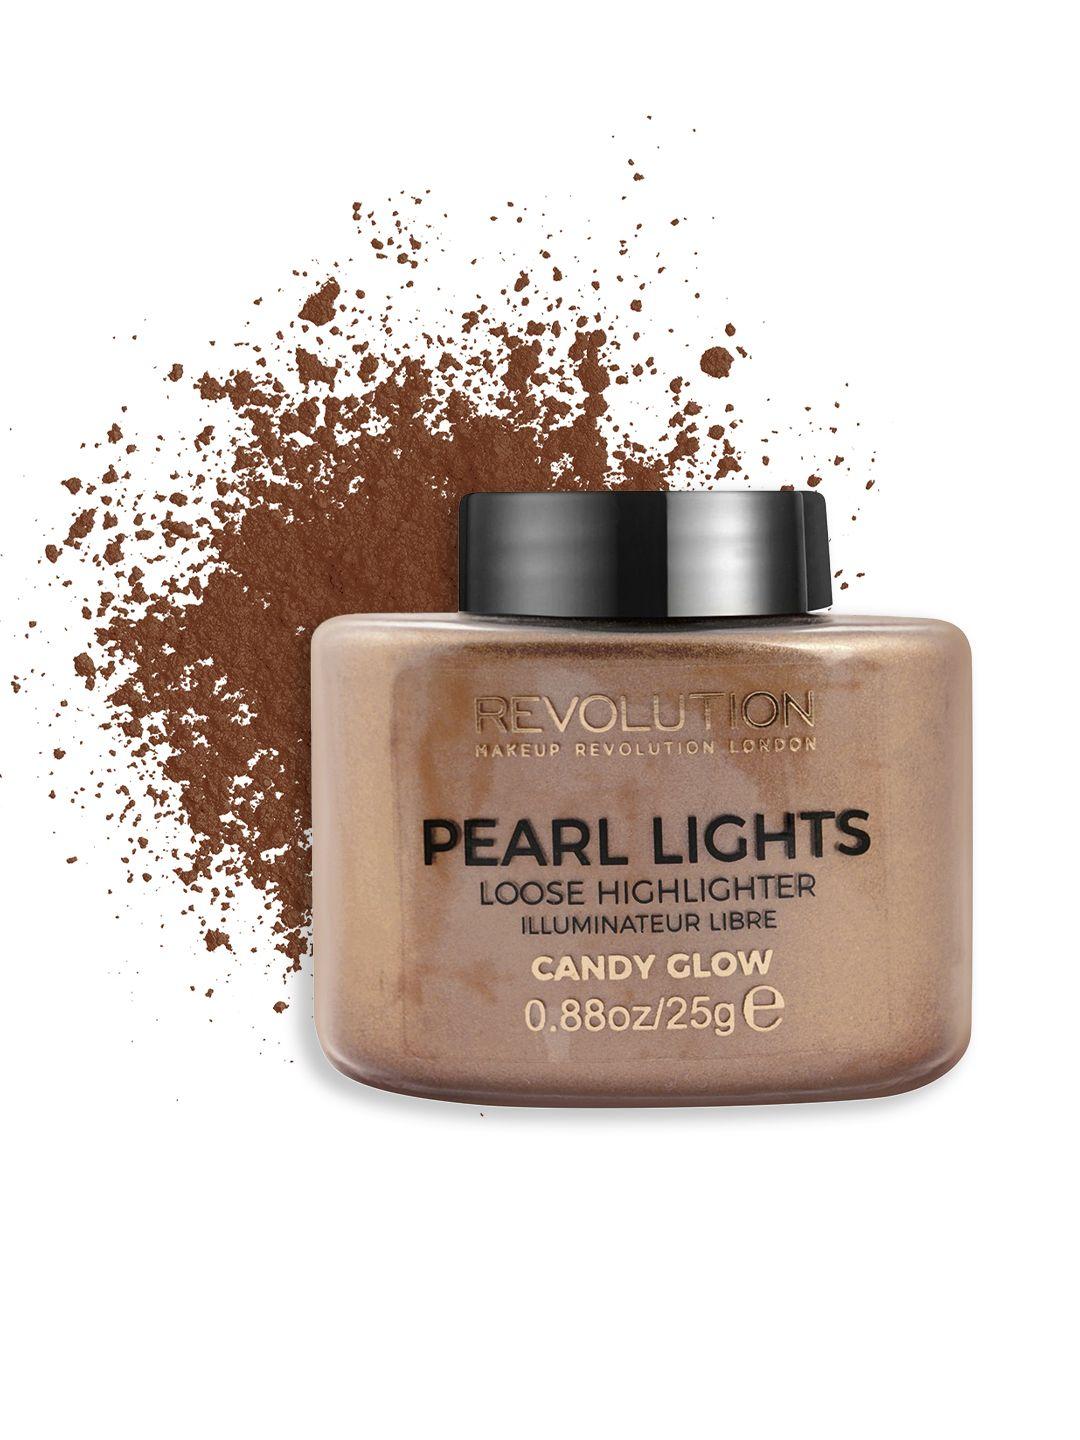 makeup revolution candy gloss pearl lights loose highlighter - 25g